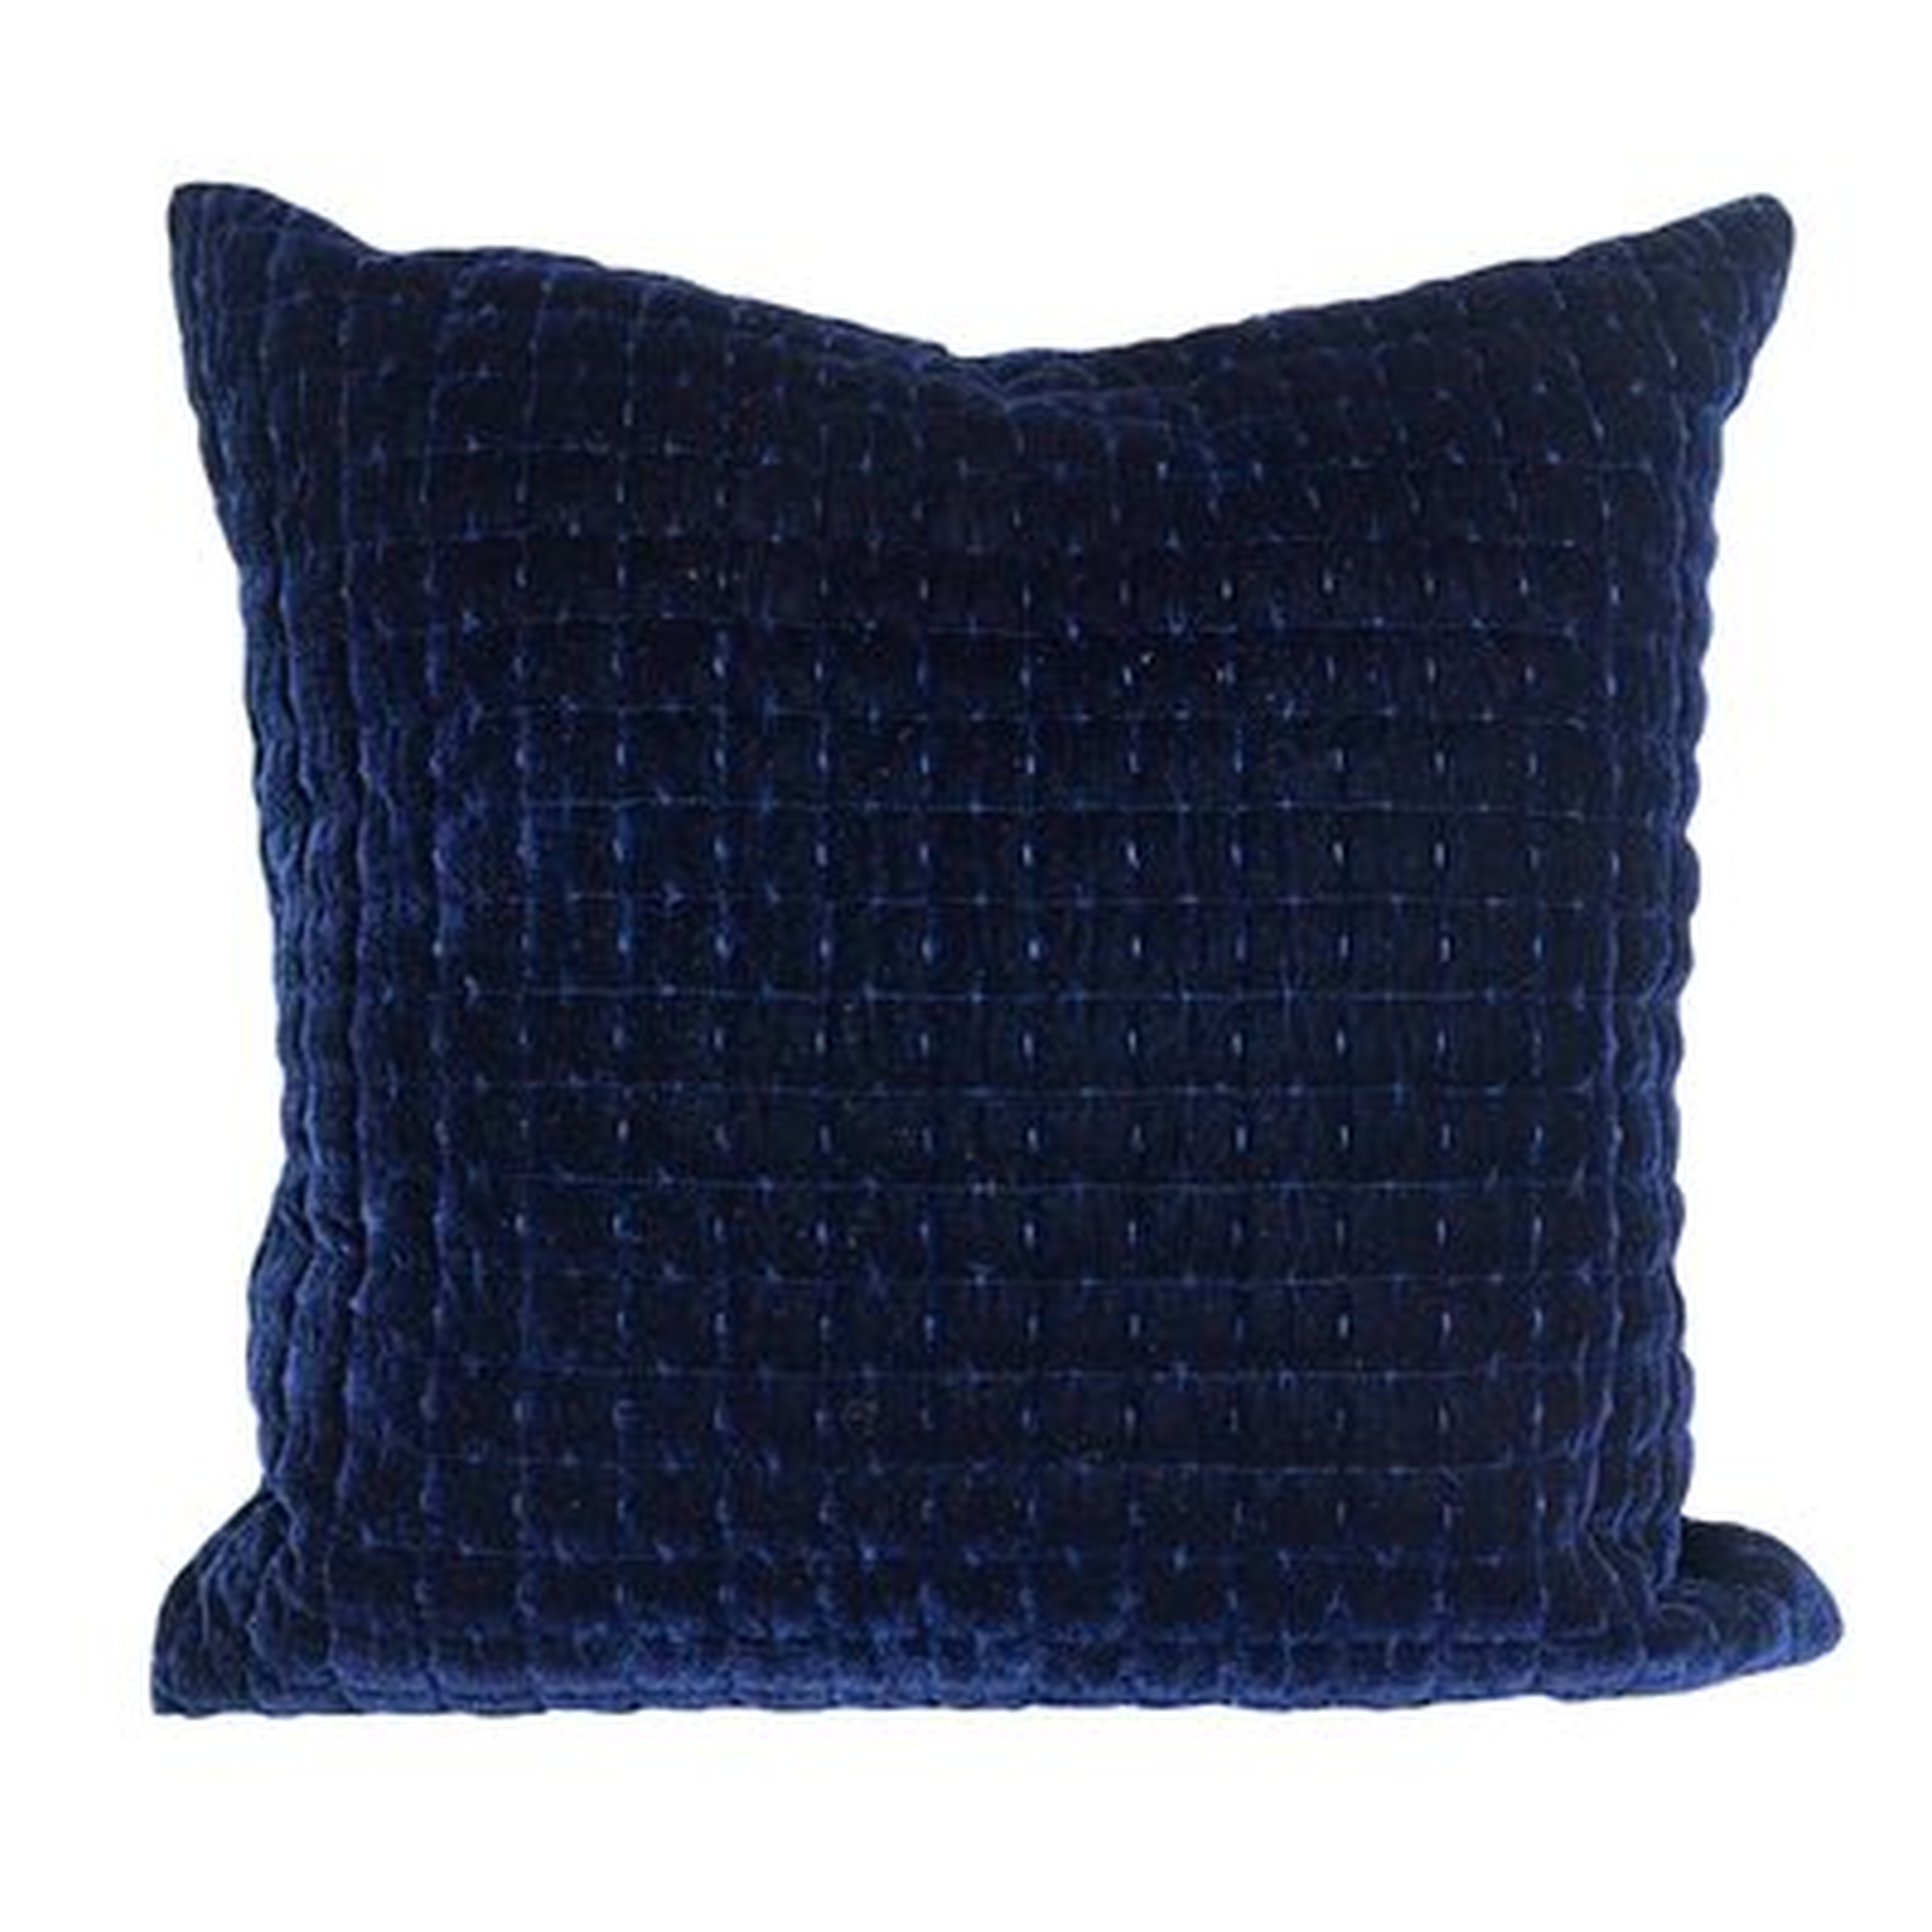 Grimpante Quilted Velvet Cushion 18X18 - Wayfair